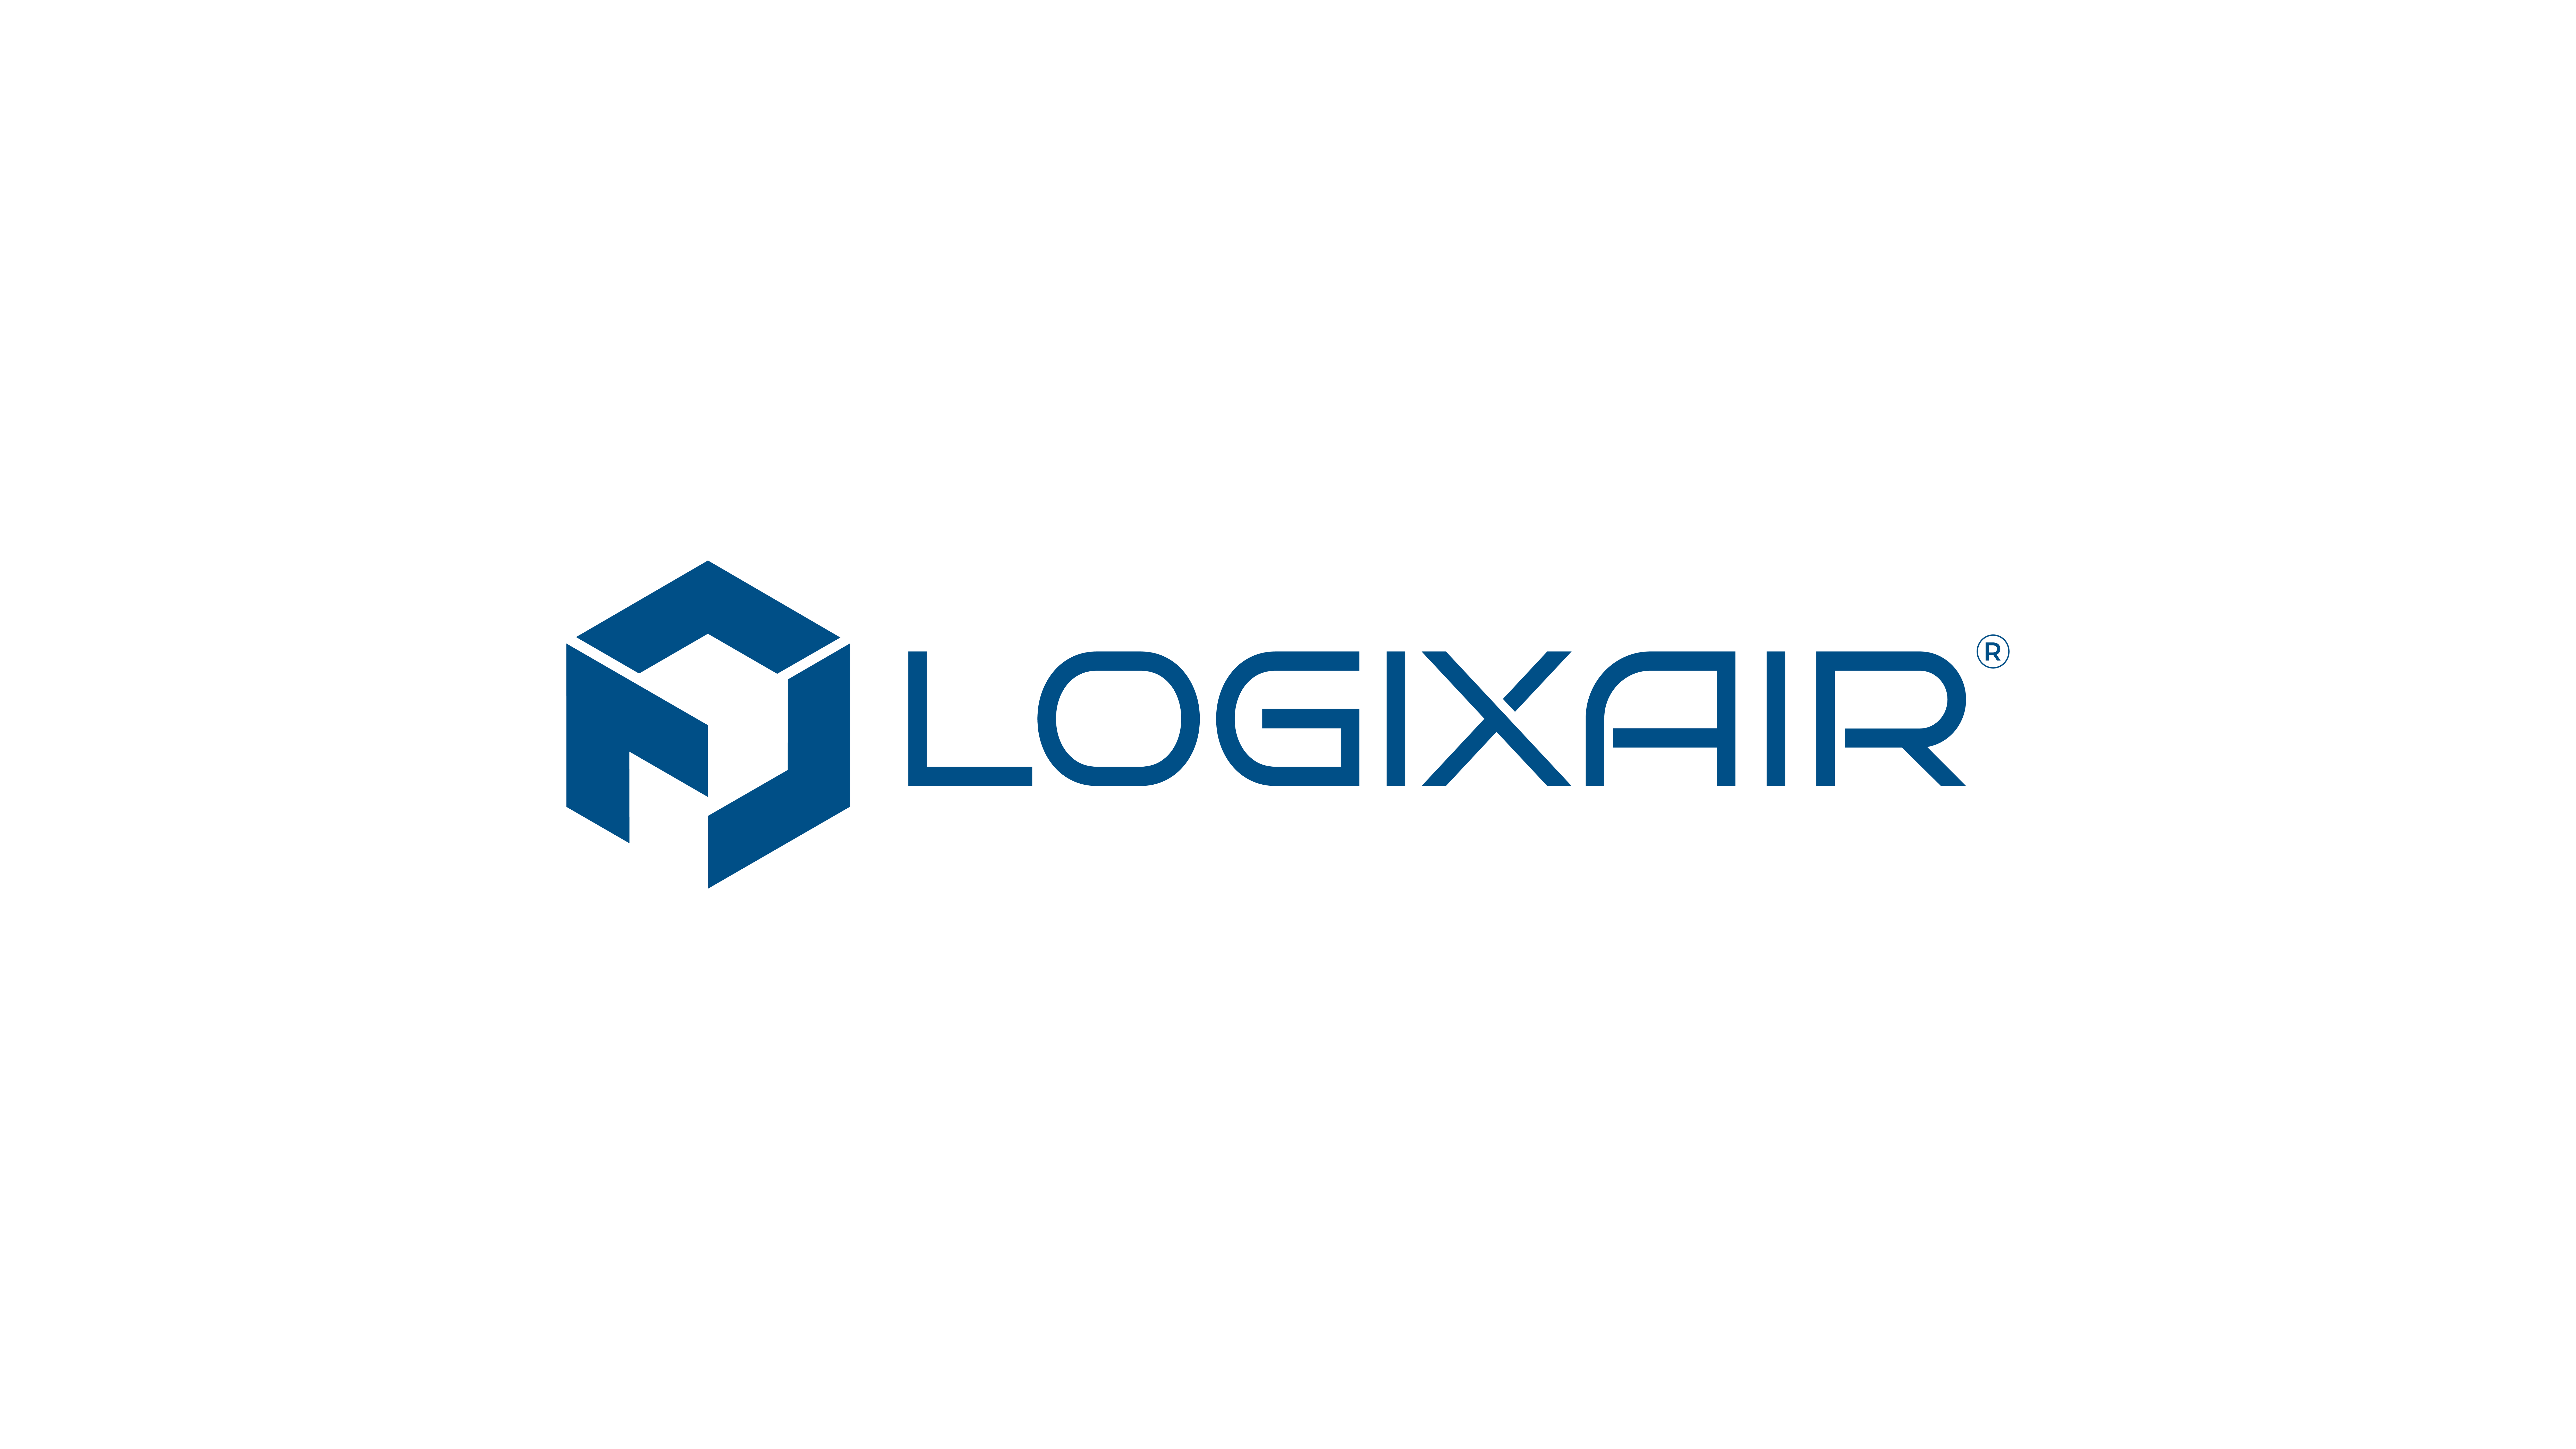 Brand Identity Design for Cargo Drone Startup - Branding & Positionering